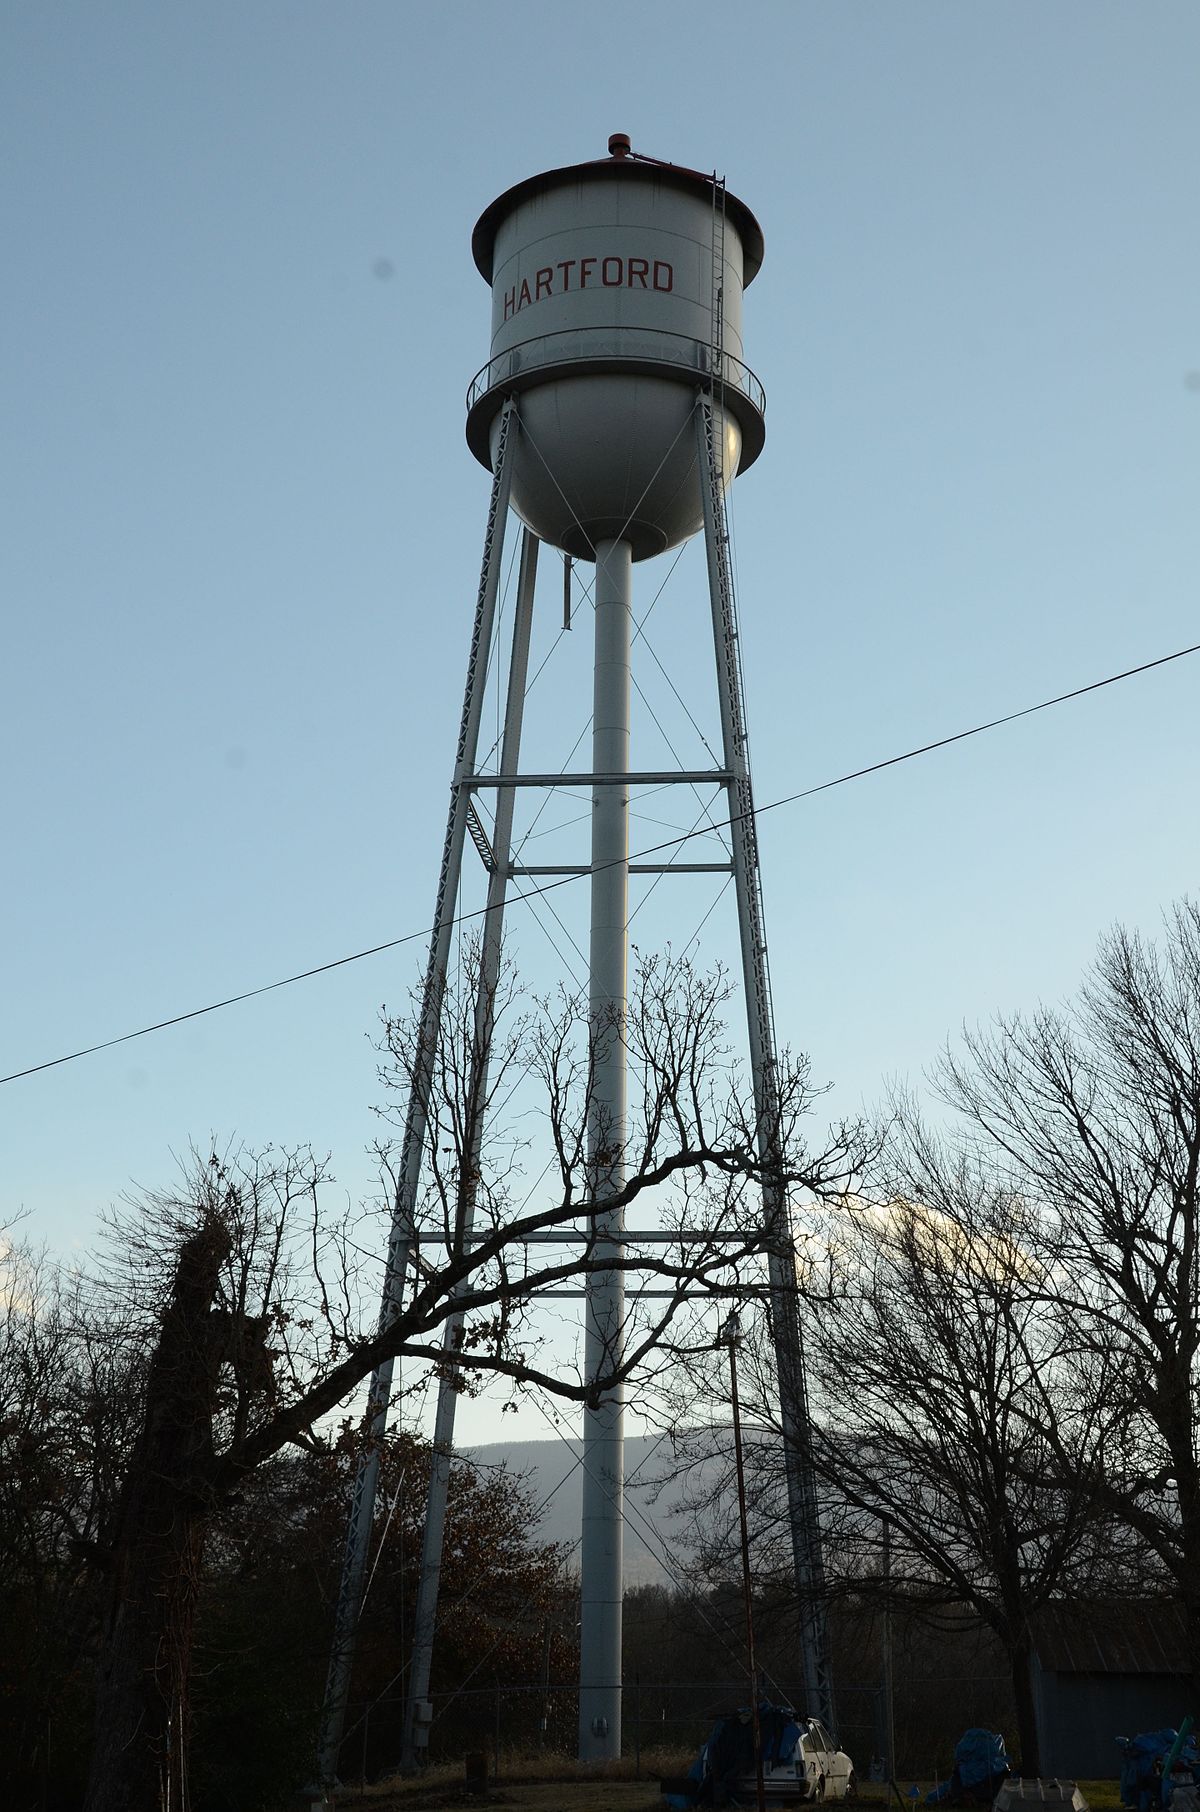 Hartford Water Tower - Wikipedia